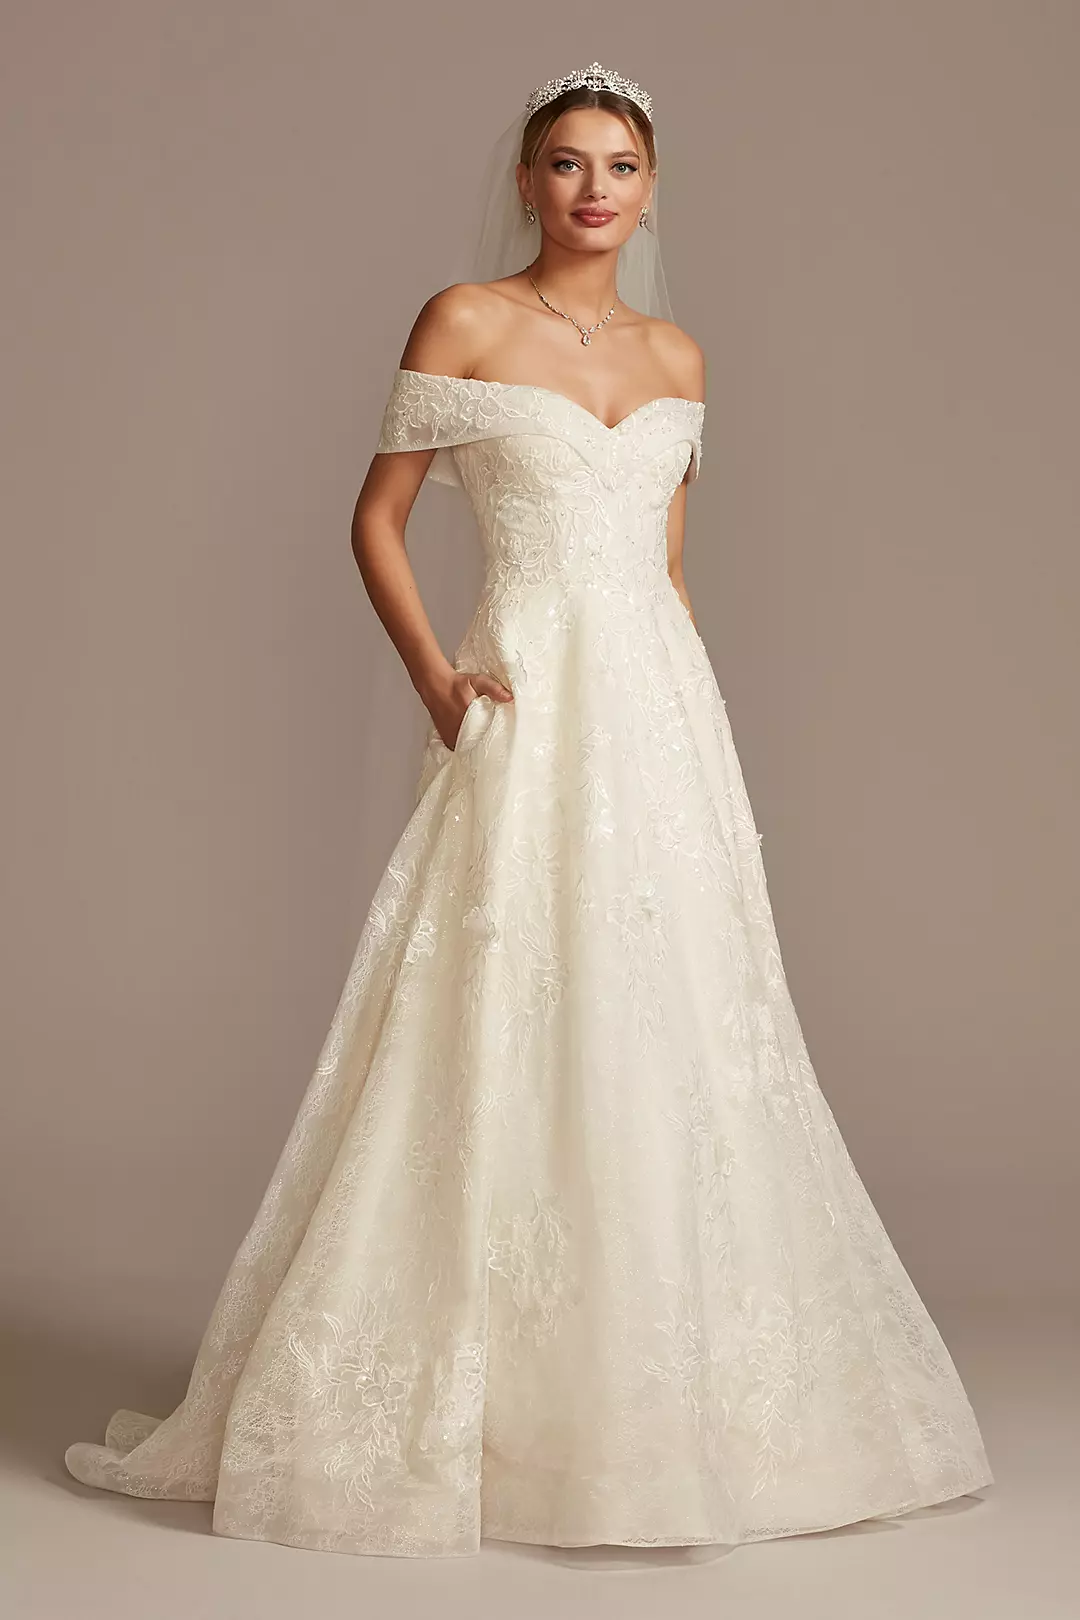 Cuff Off the Shoulder Lace 3D Floral Wedding Dress Image